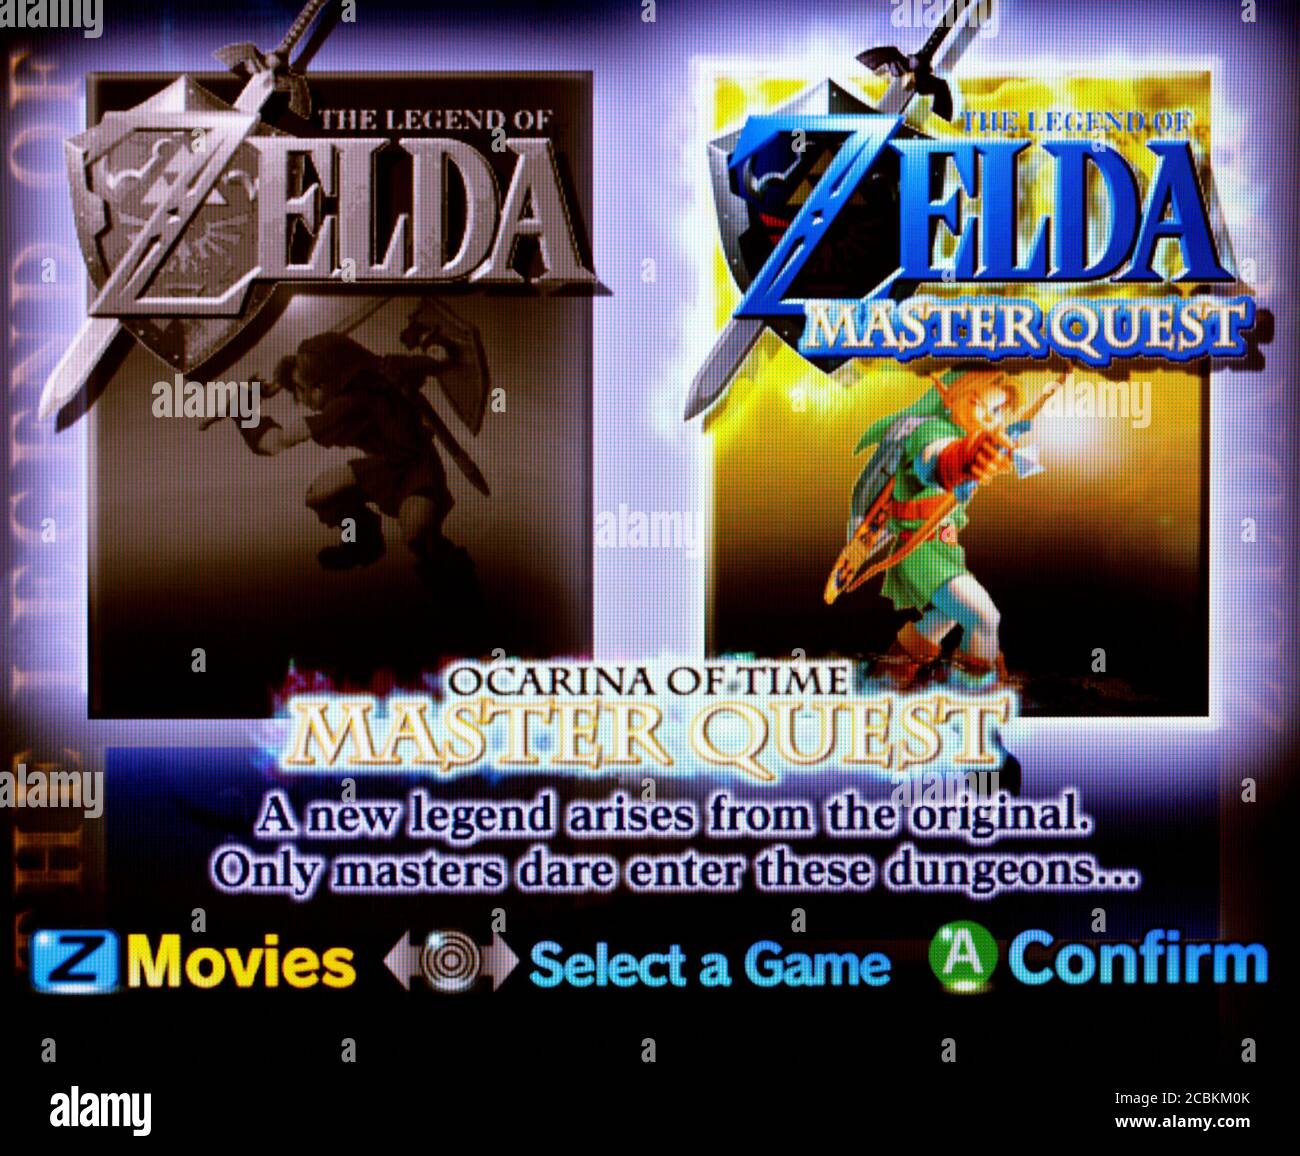 The Legend of Zelda: Ocarina of Time - Master Quest - Nintendo